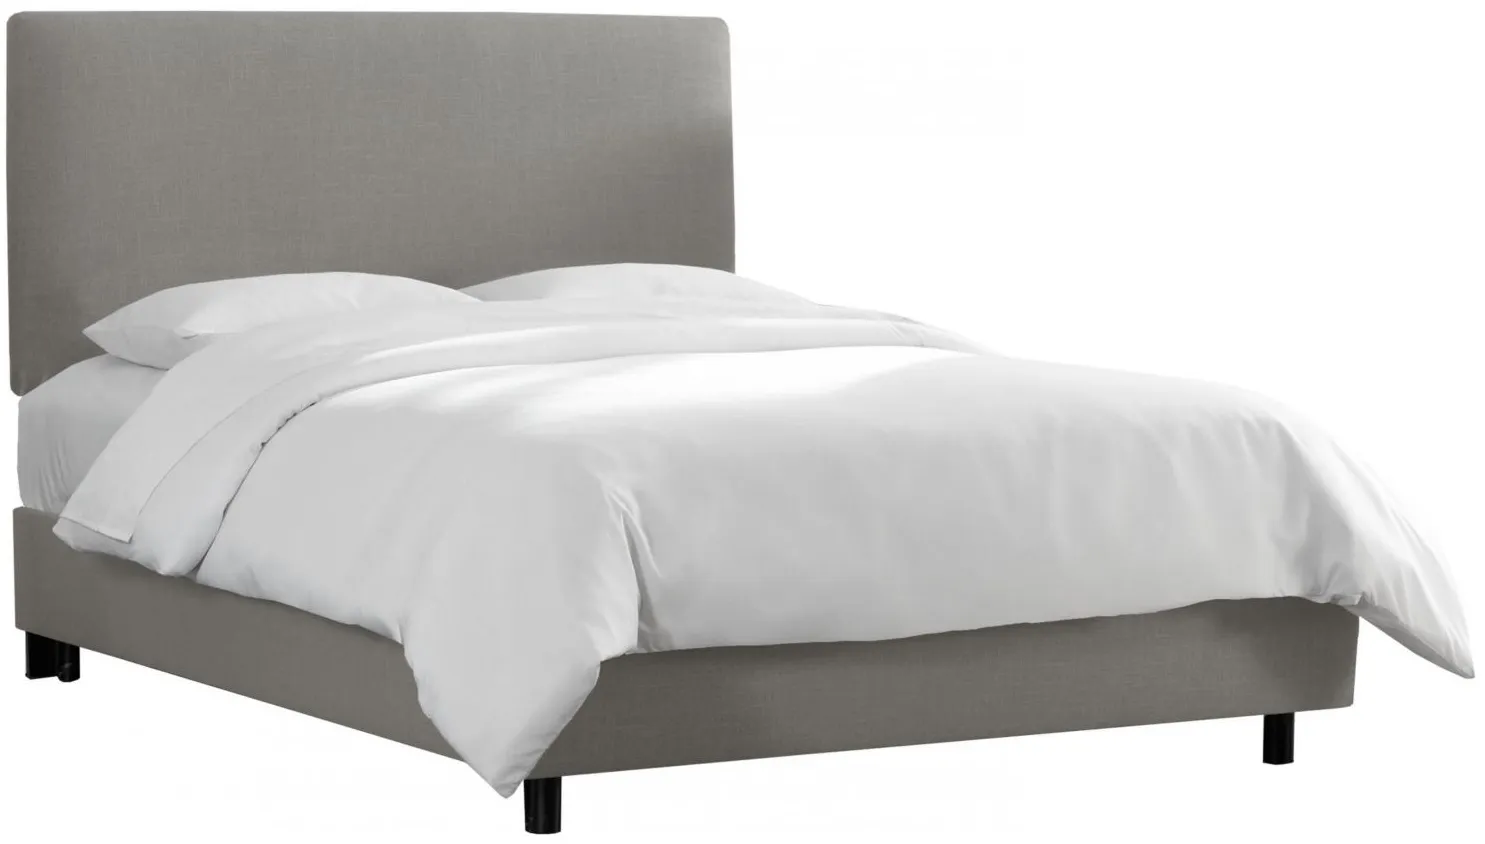 Valerie Bed in Linen Gray by Skyline